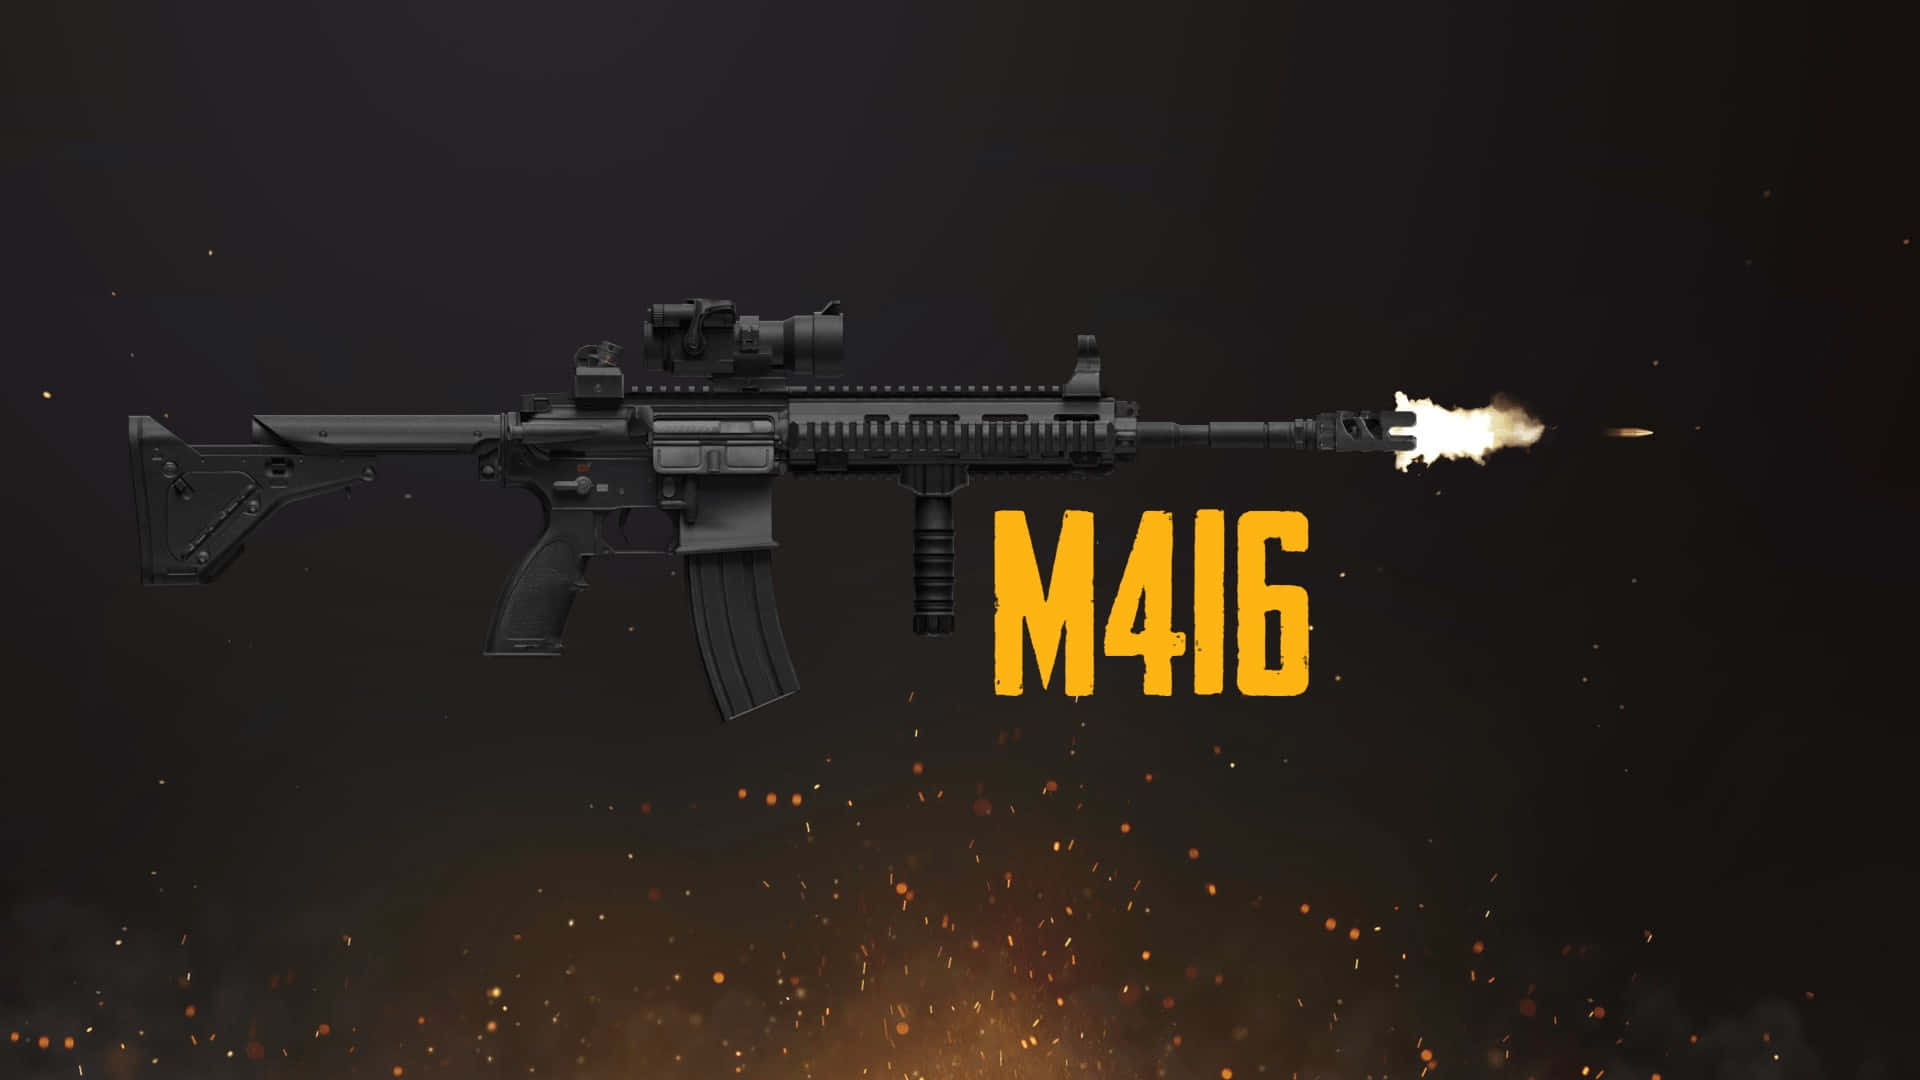 M416 Rifle Firing Sparks Wallpaper